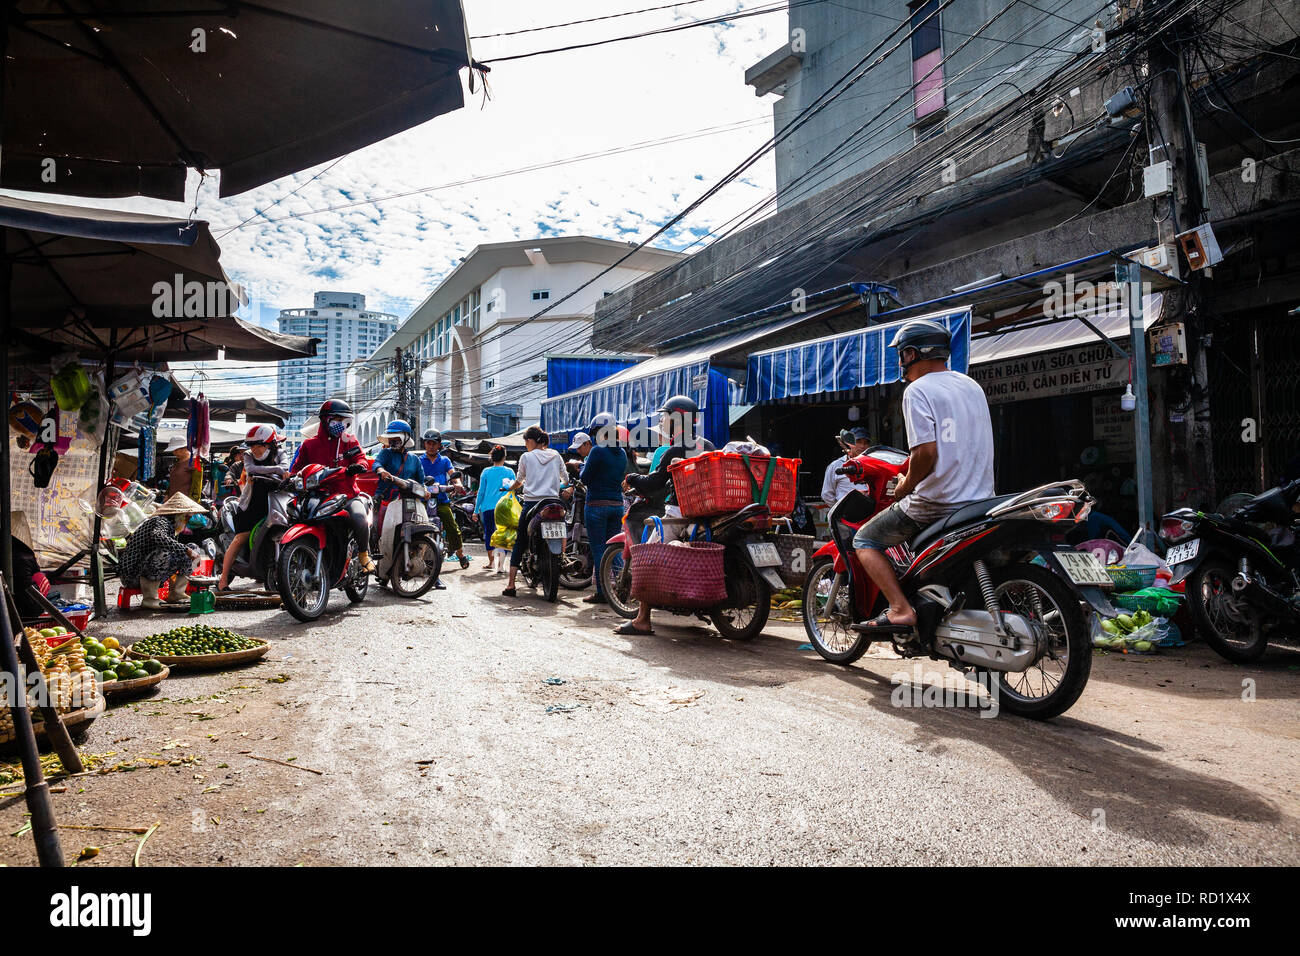 NHA TRANG, VIETNAM - SEPTEMBER 12: Typical morning traffic jam at the Cho Dam market in Nha Trang on September 12, 2018 in Nha Trang, Vietnam. Stock Photo